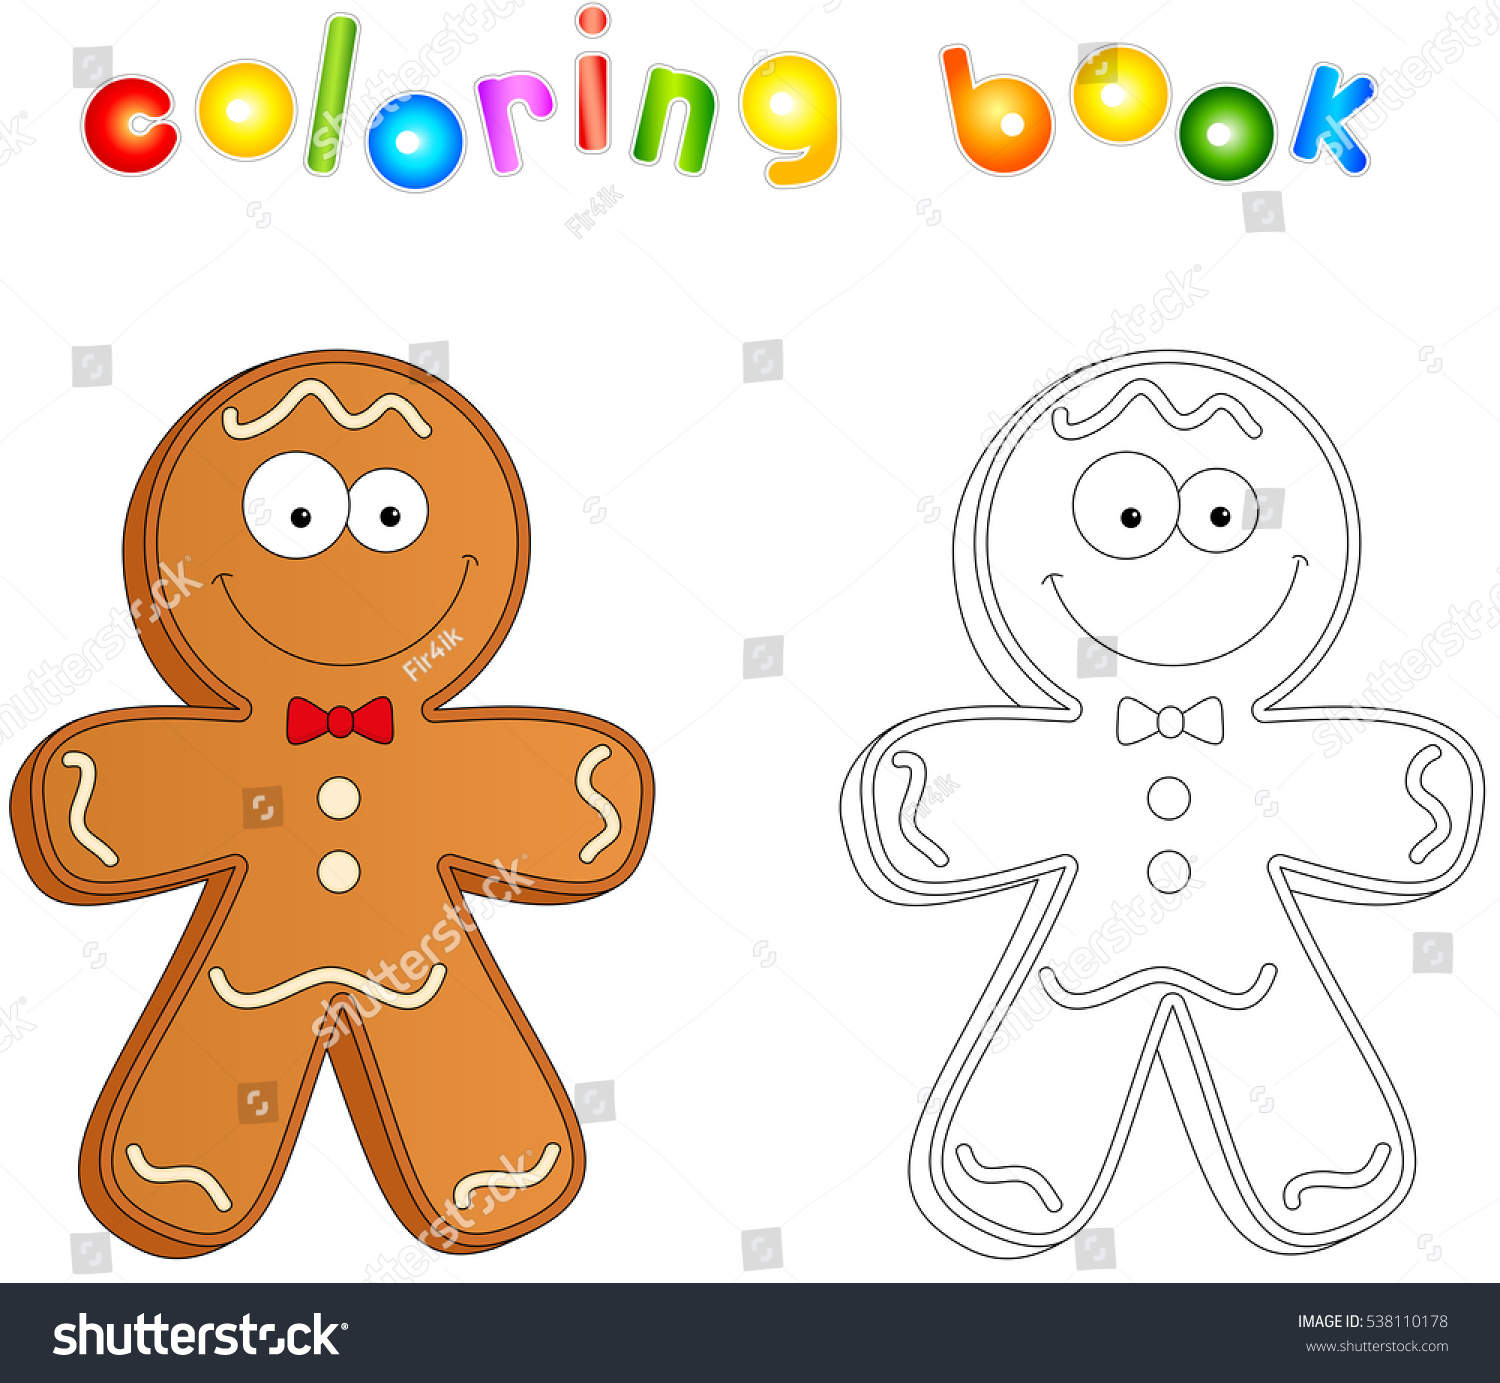 Christmas gingerbread man coloring book kids stock vector royalty free